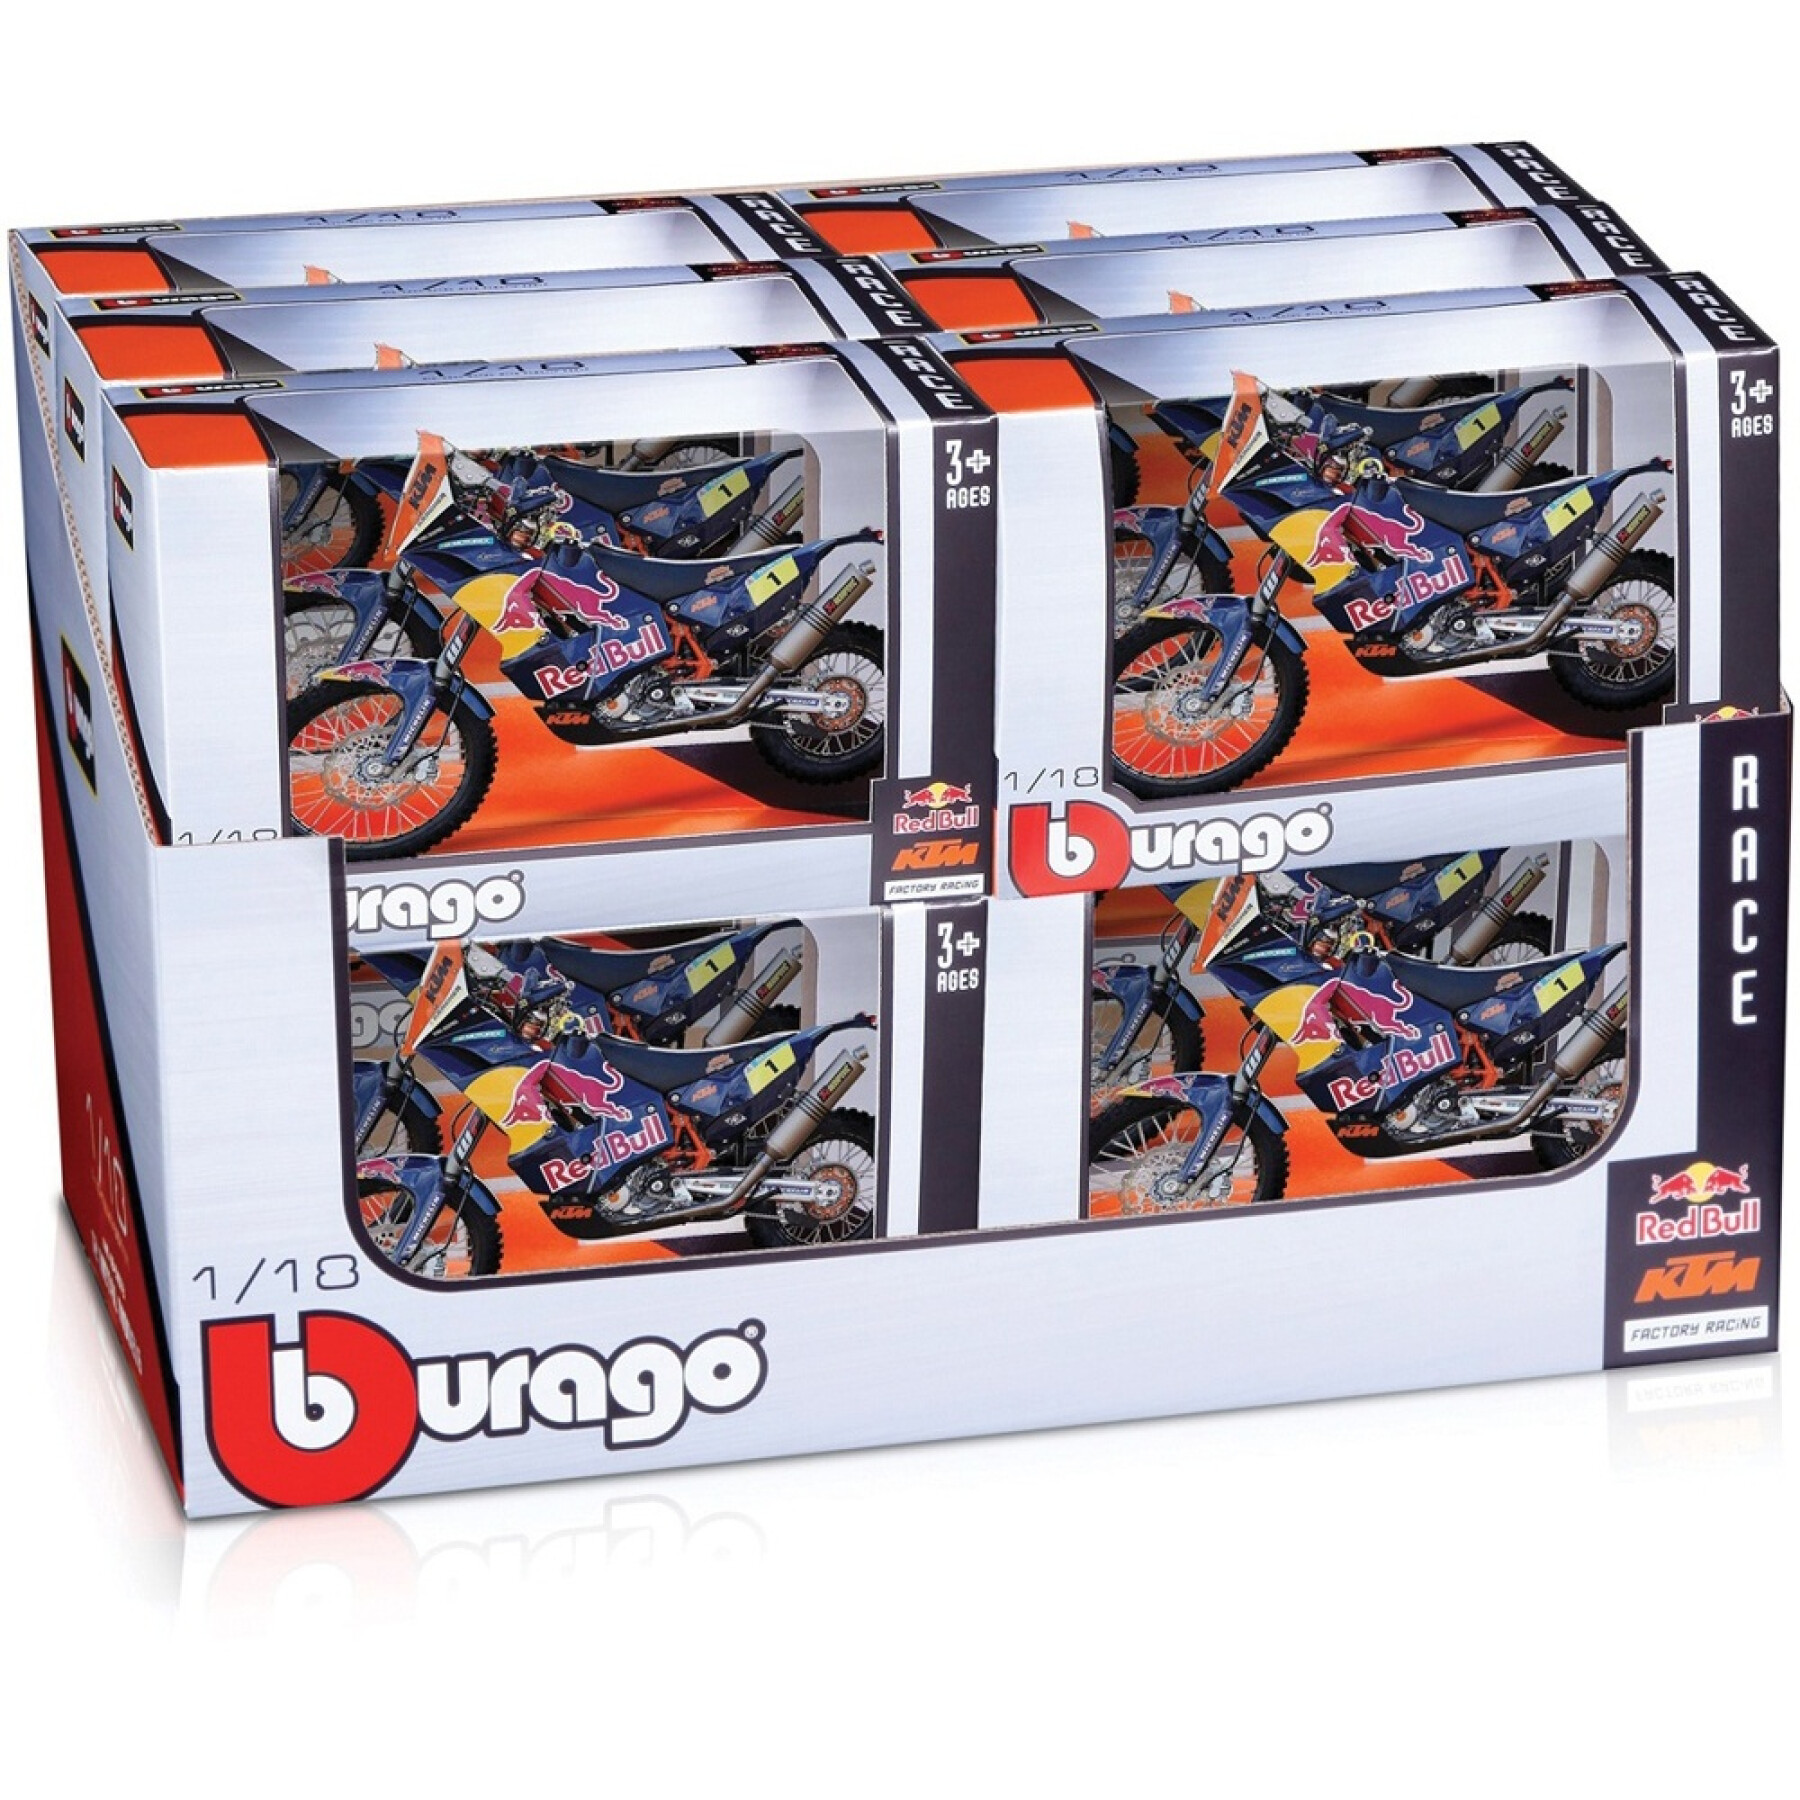 Motorcycle car games Burago Red Bull Ktm 1/18